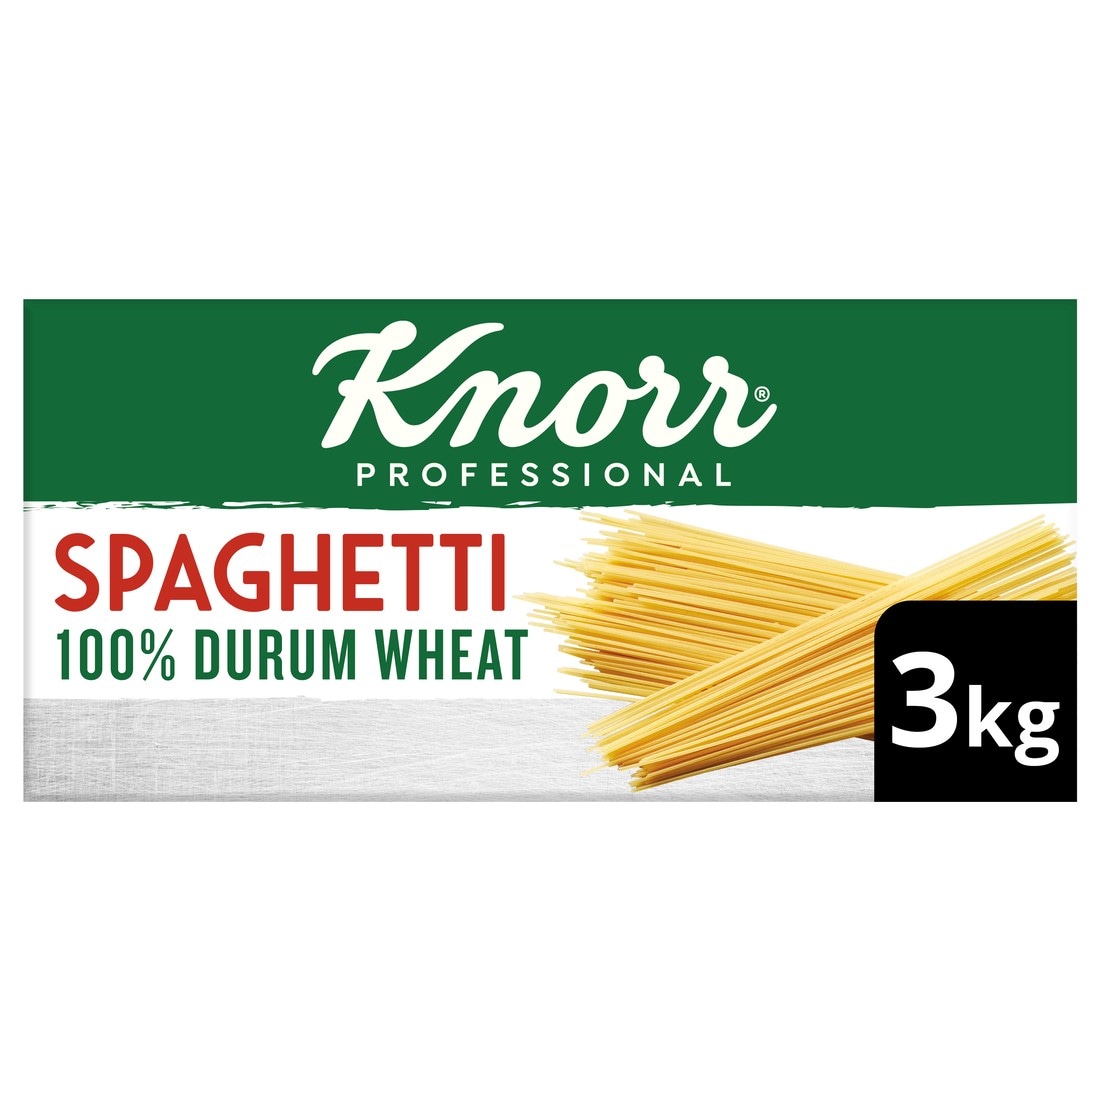 Knorr Professional Italiana Spaghetti 3kg - 